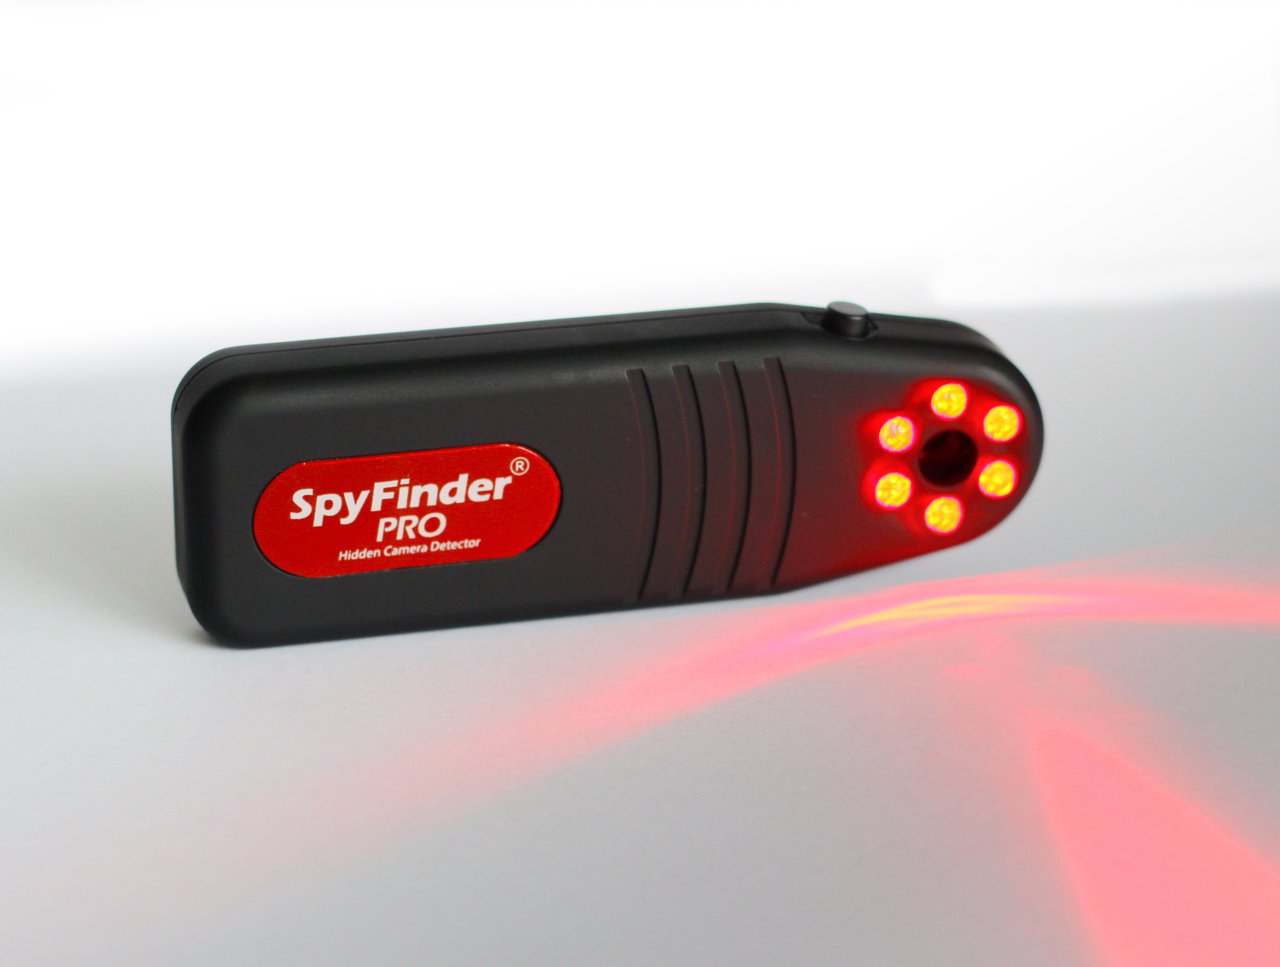 SpyFinder ® PRO Hidden Camera Detector